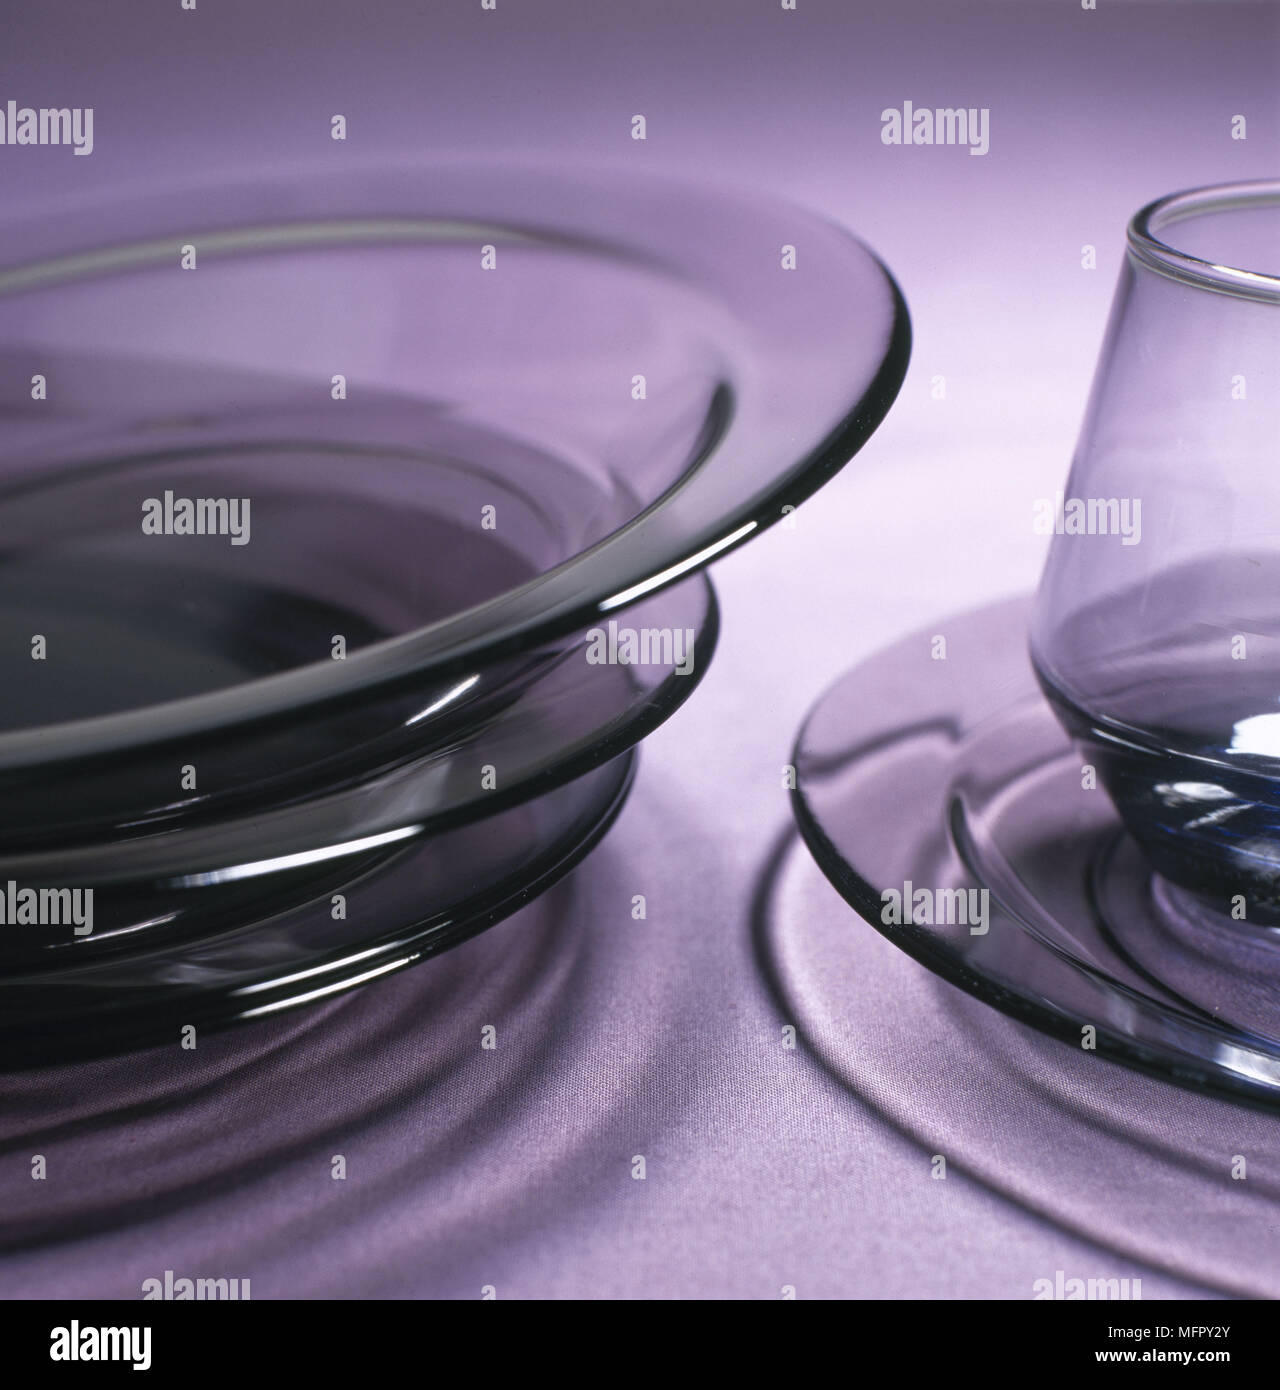 Modern purple glass dishes Stock Photo - Alamy